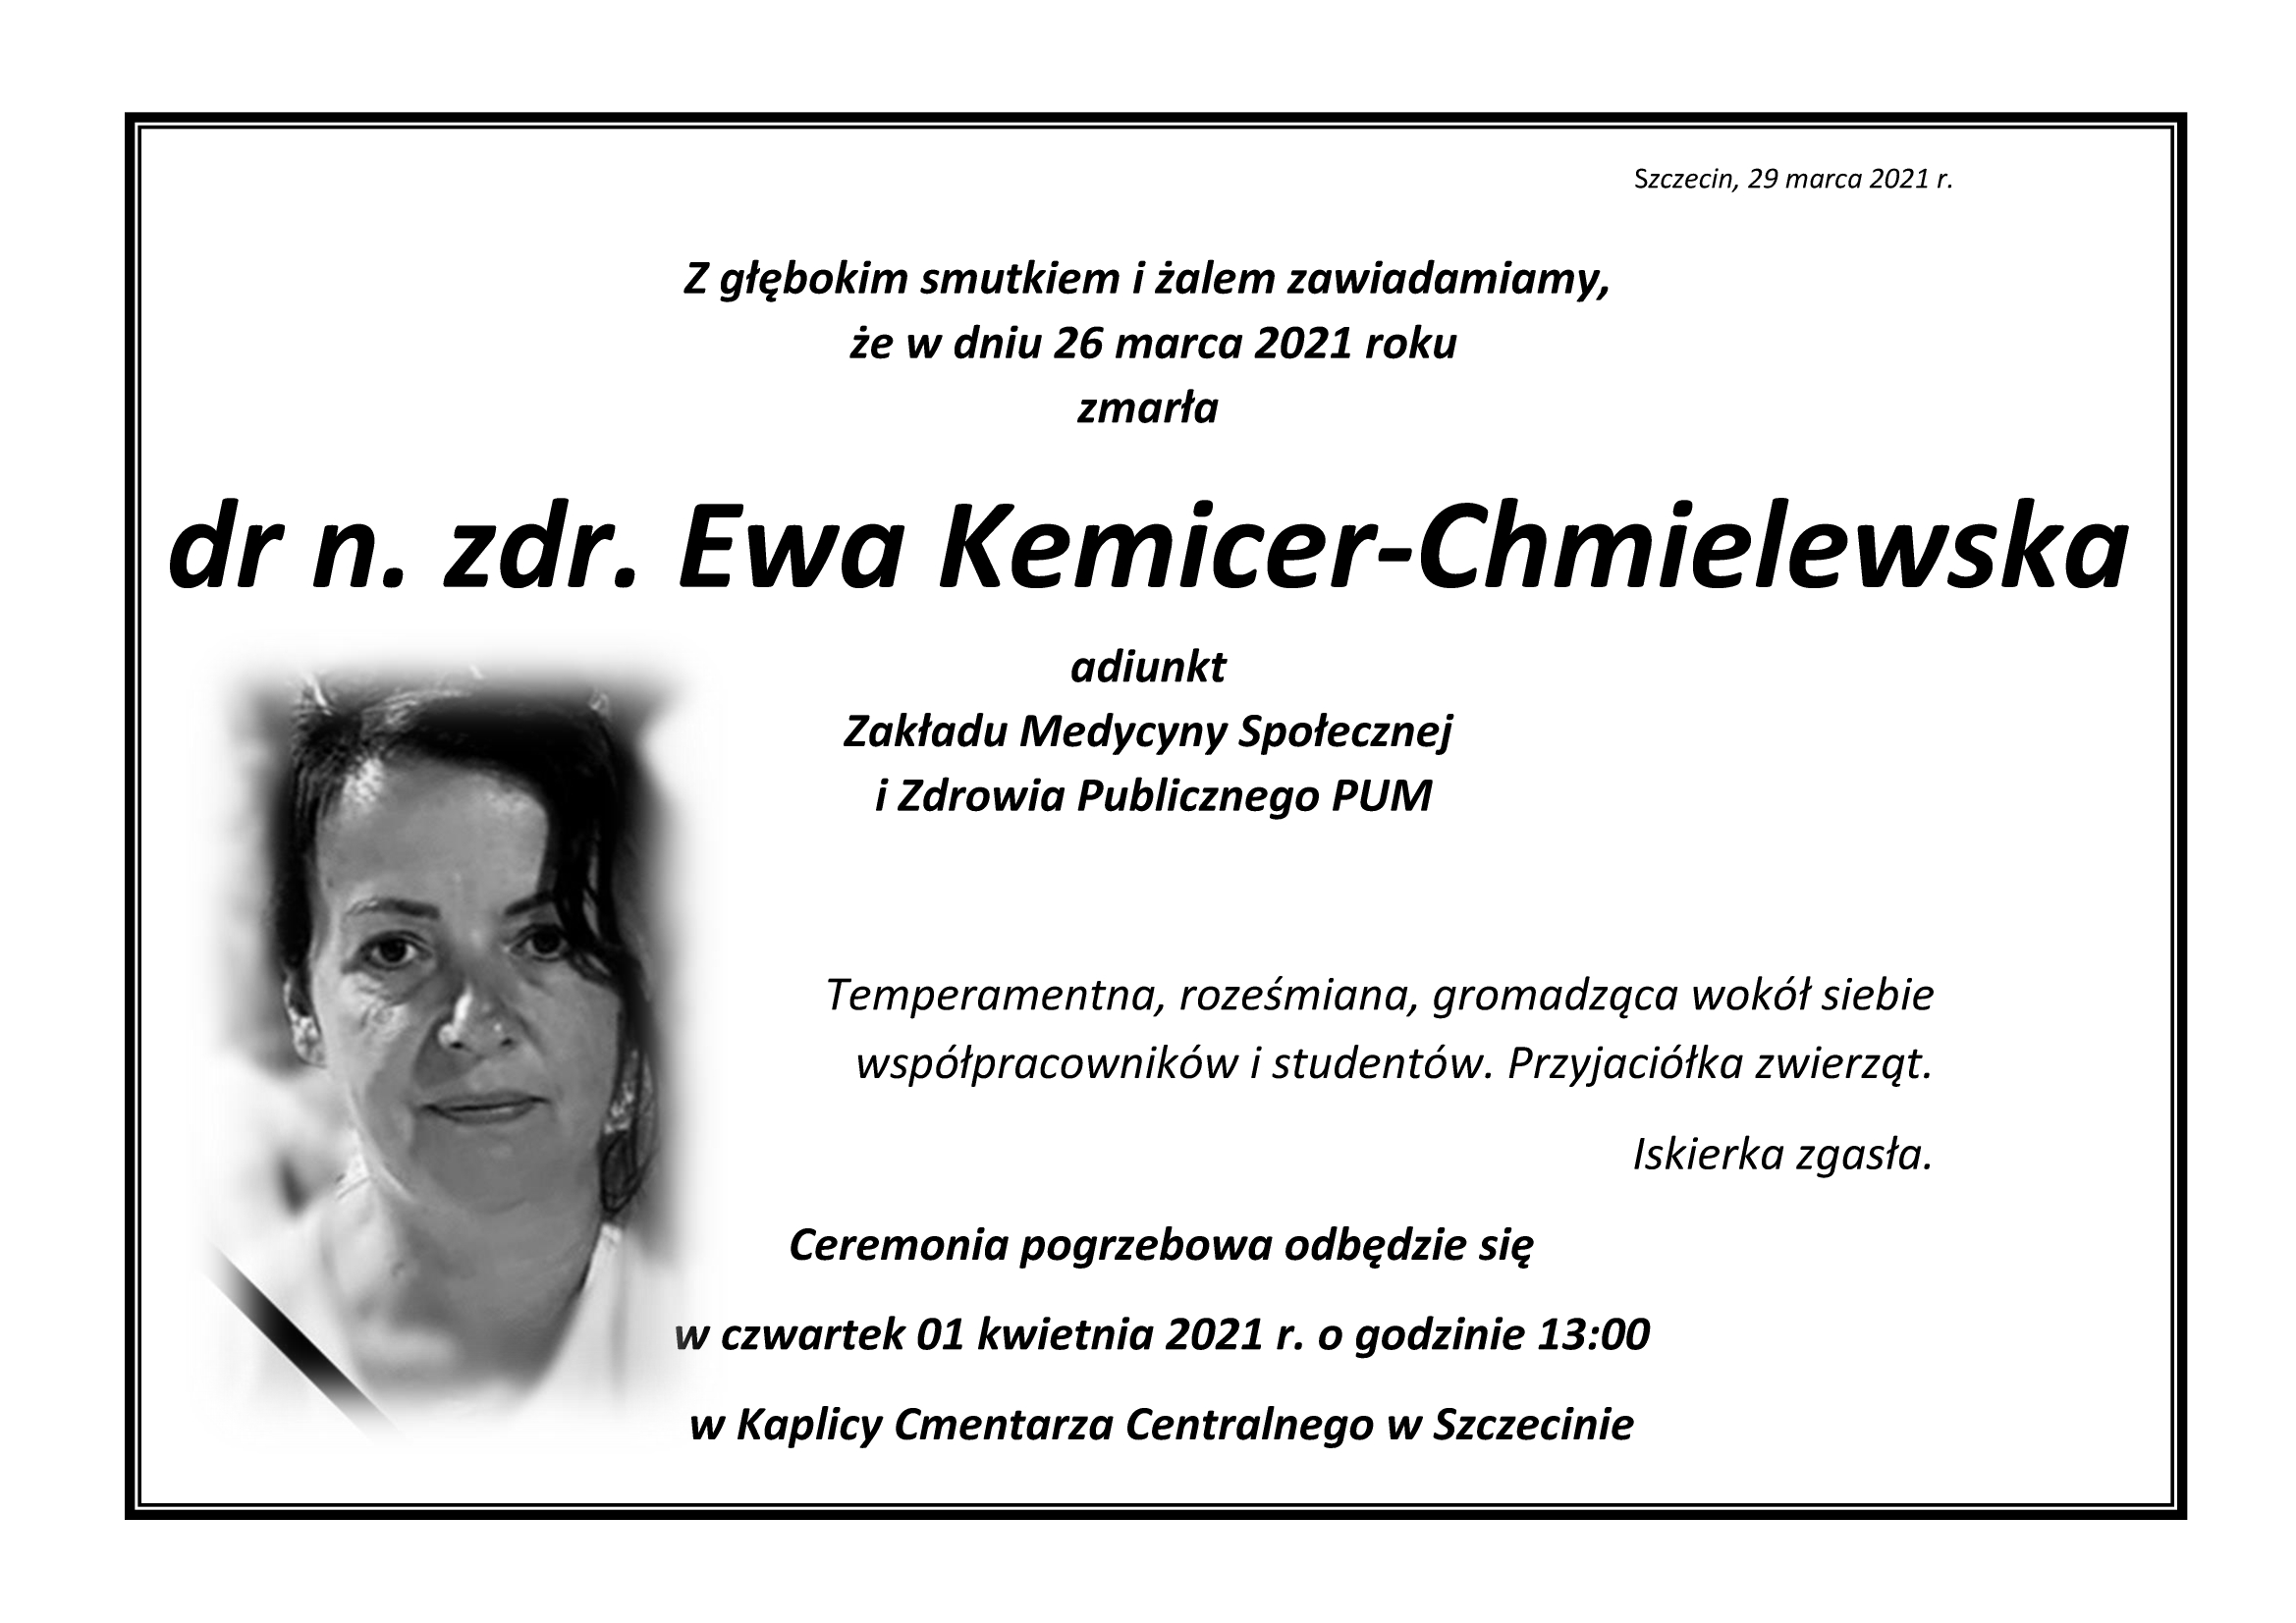 Dr n. zdr. Ewa Kemicer-Chmielewska - Jej iskierka zgasła